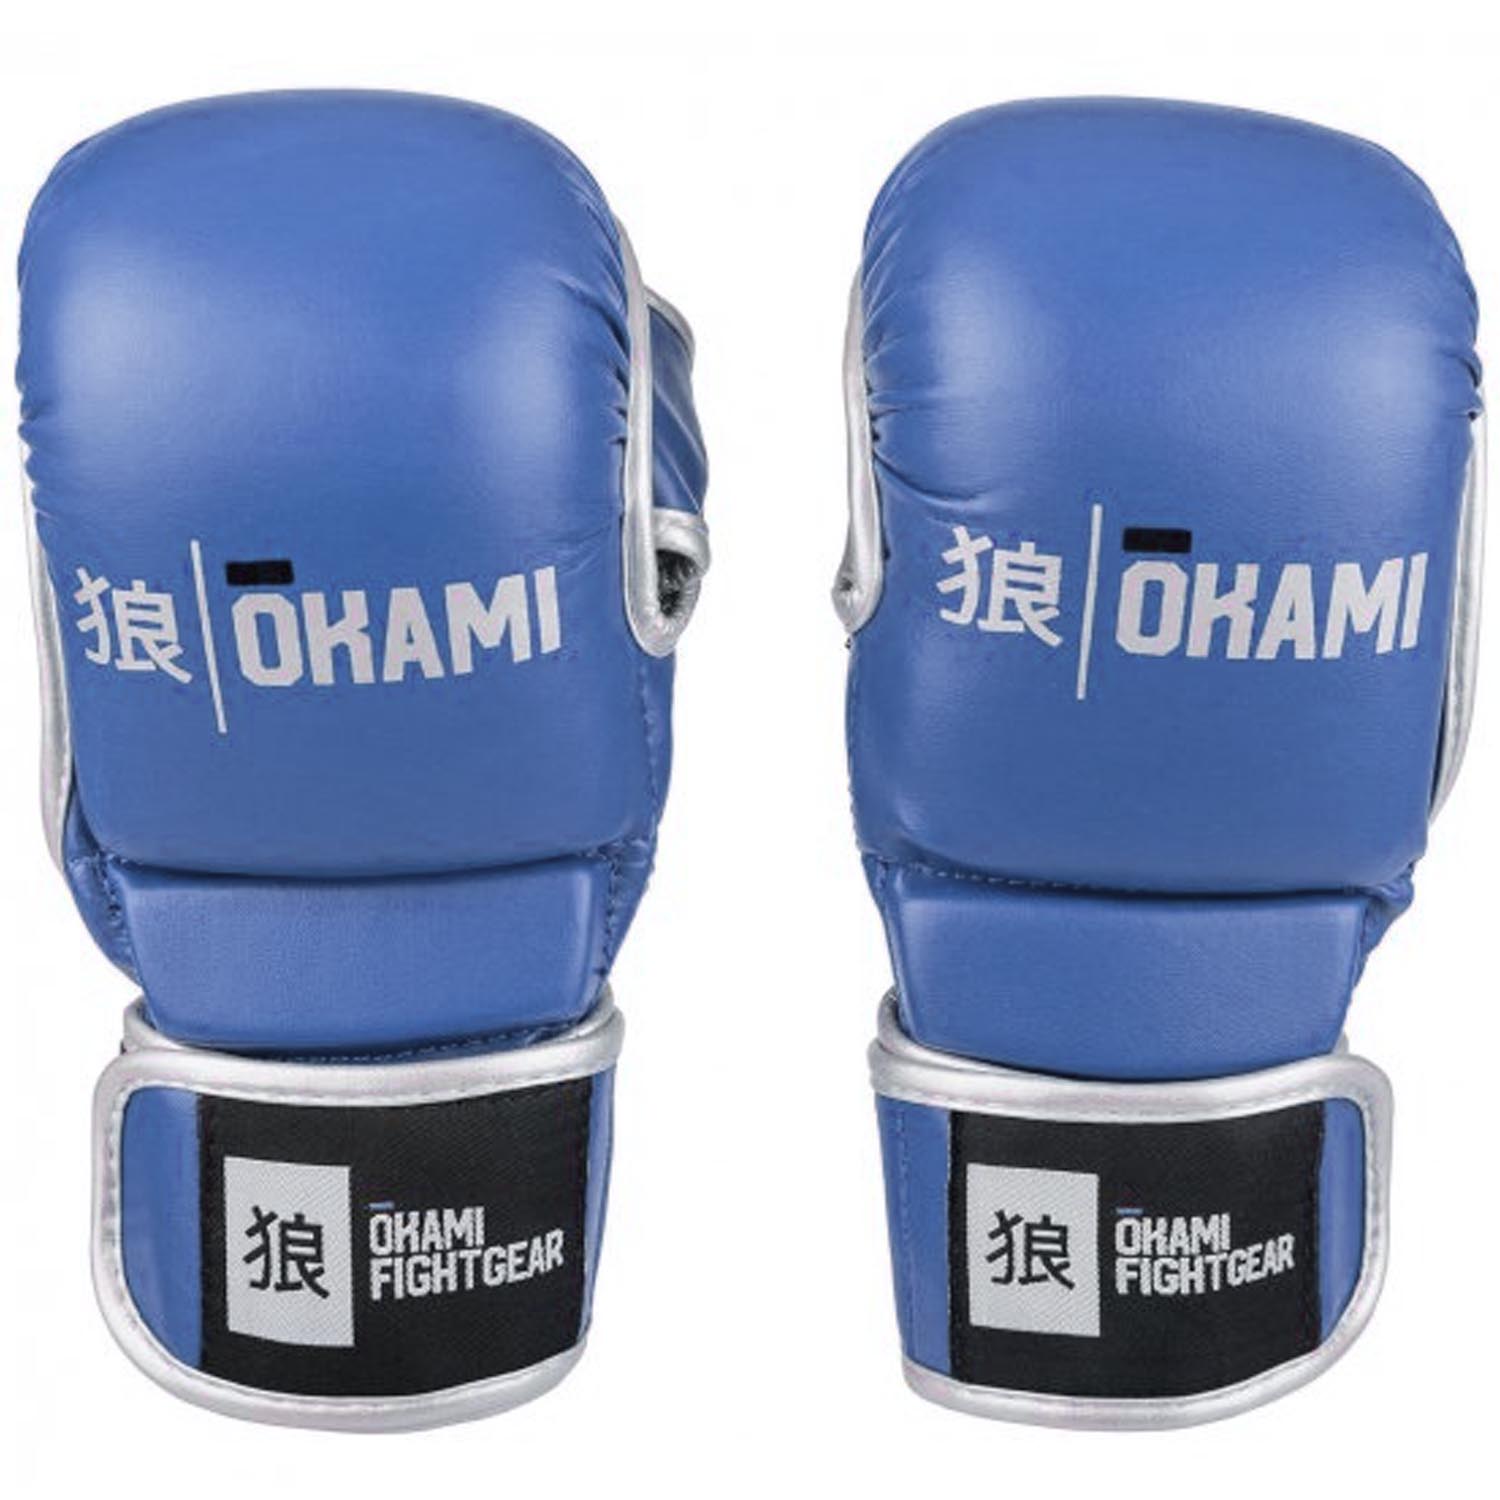 OKAMI MMA Boxing Gloves, Combat, blue, S